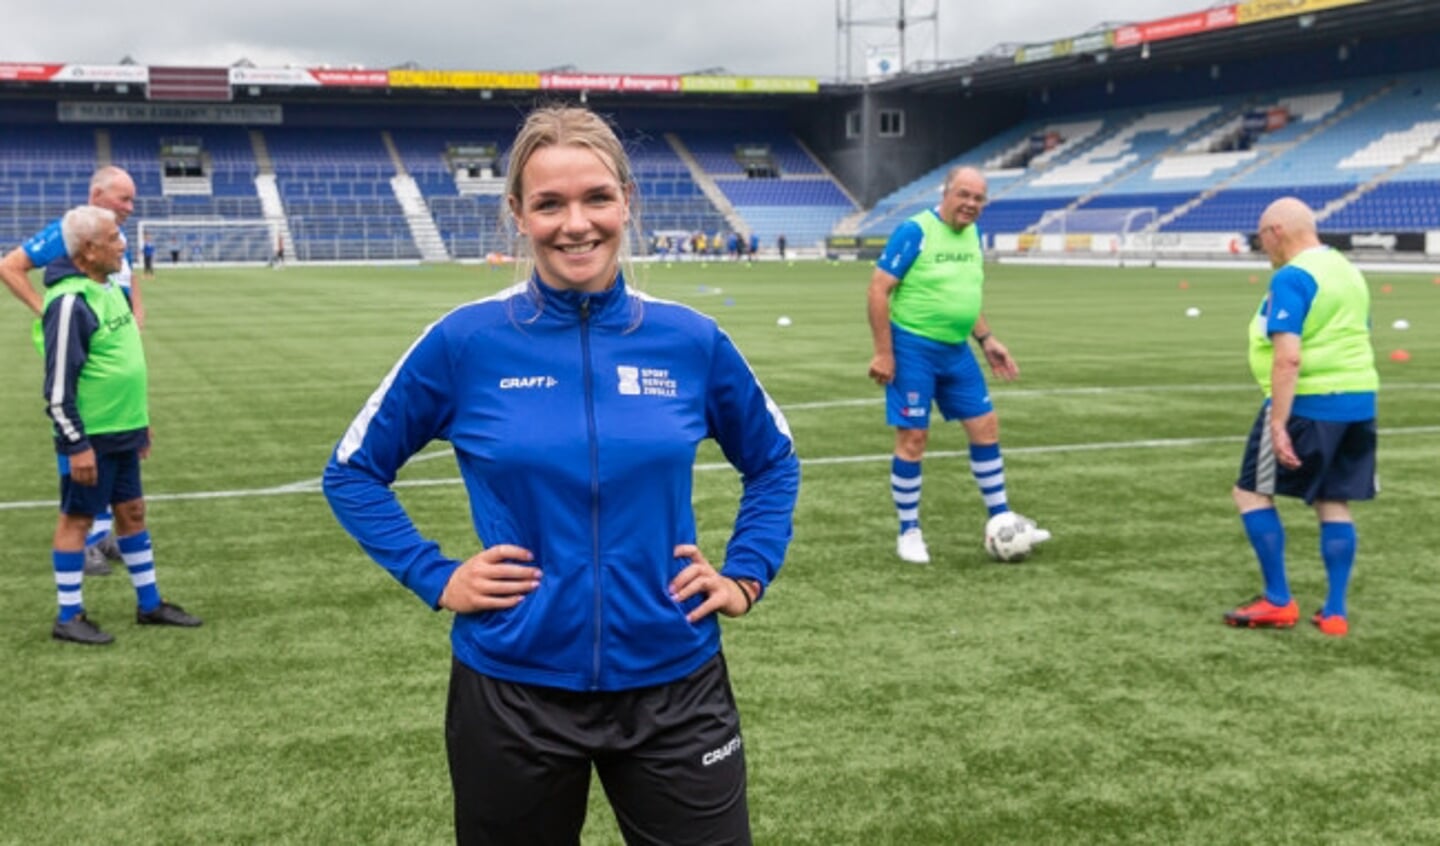  Linda de Graaff begeleidt namens SportService Zwolle Walking Football bij WVF